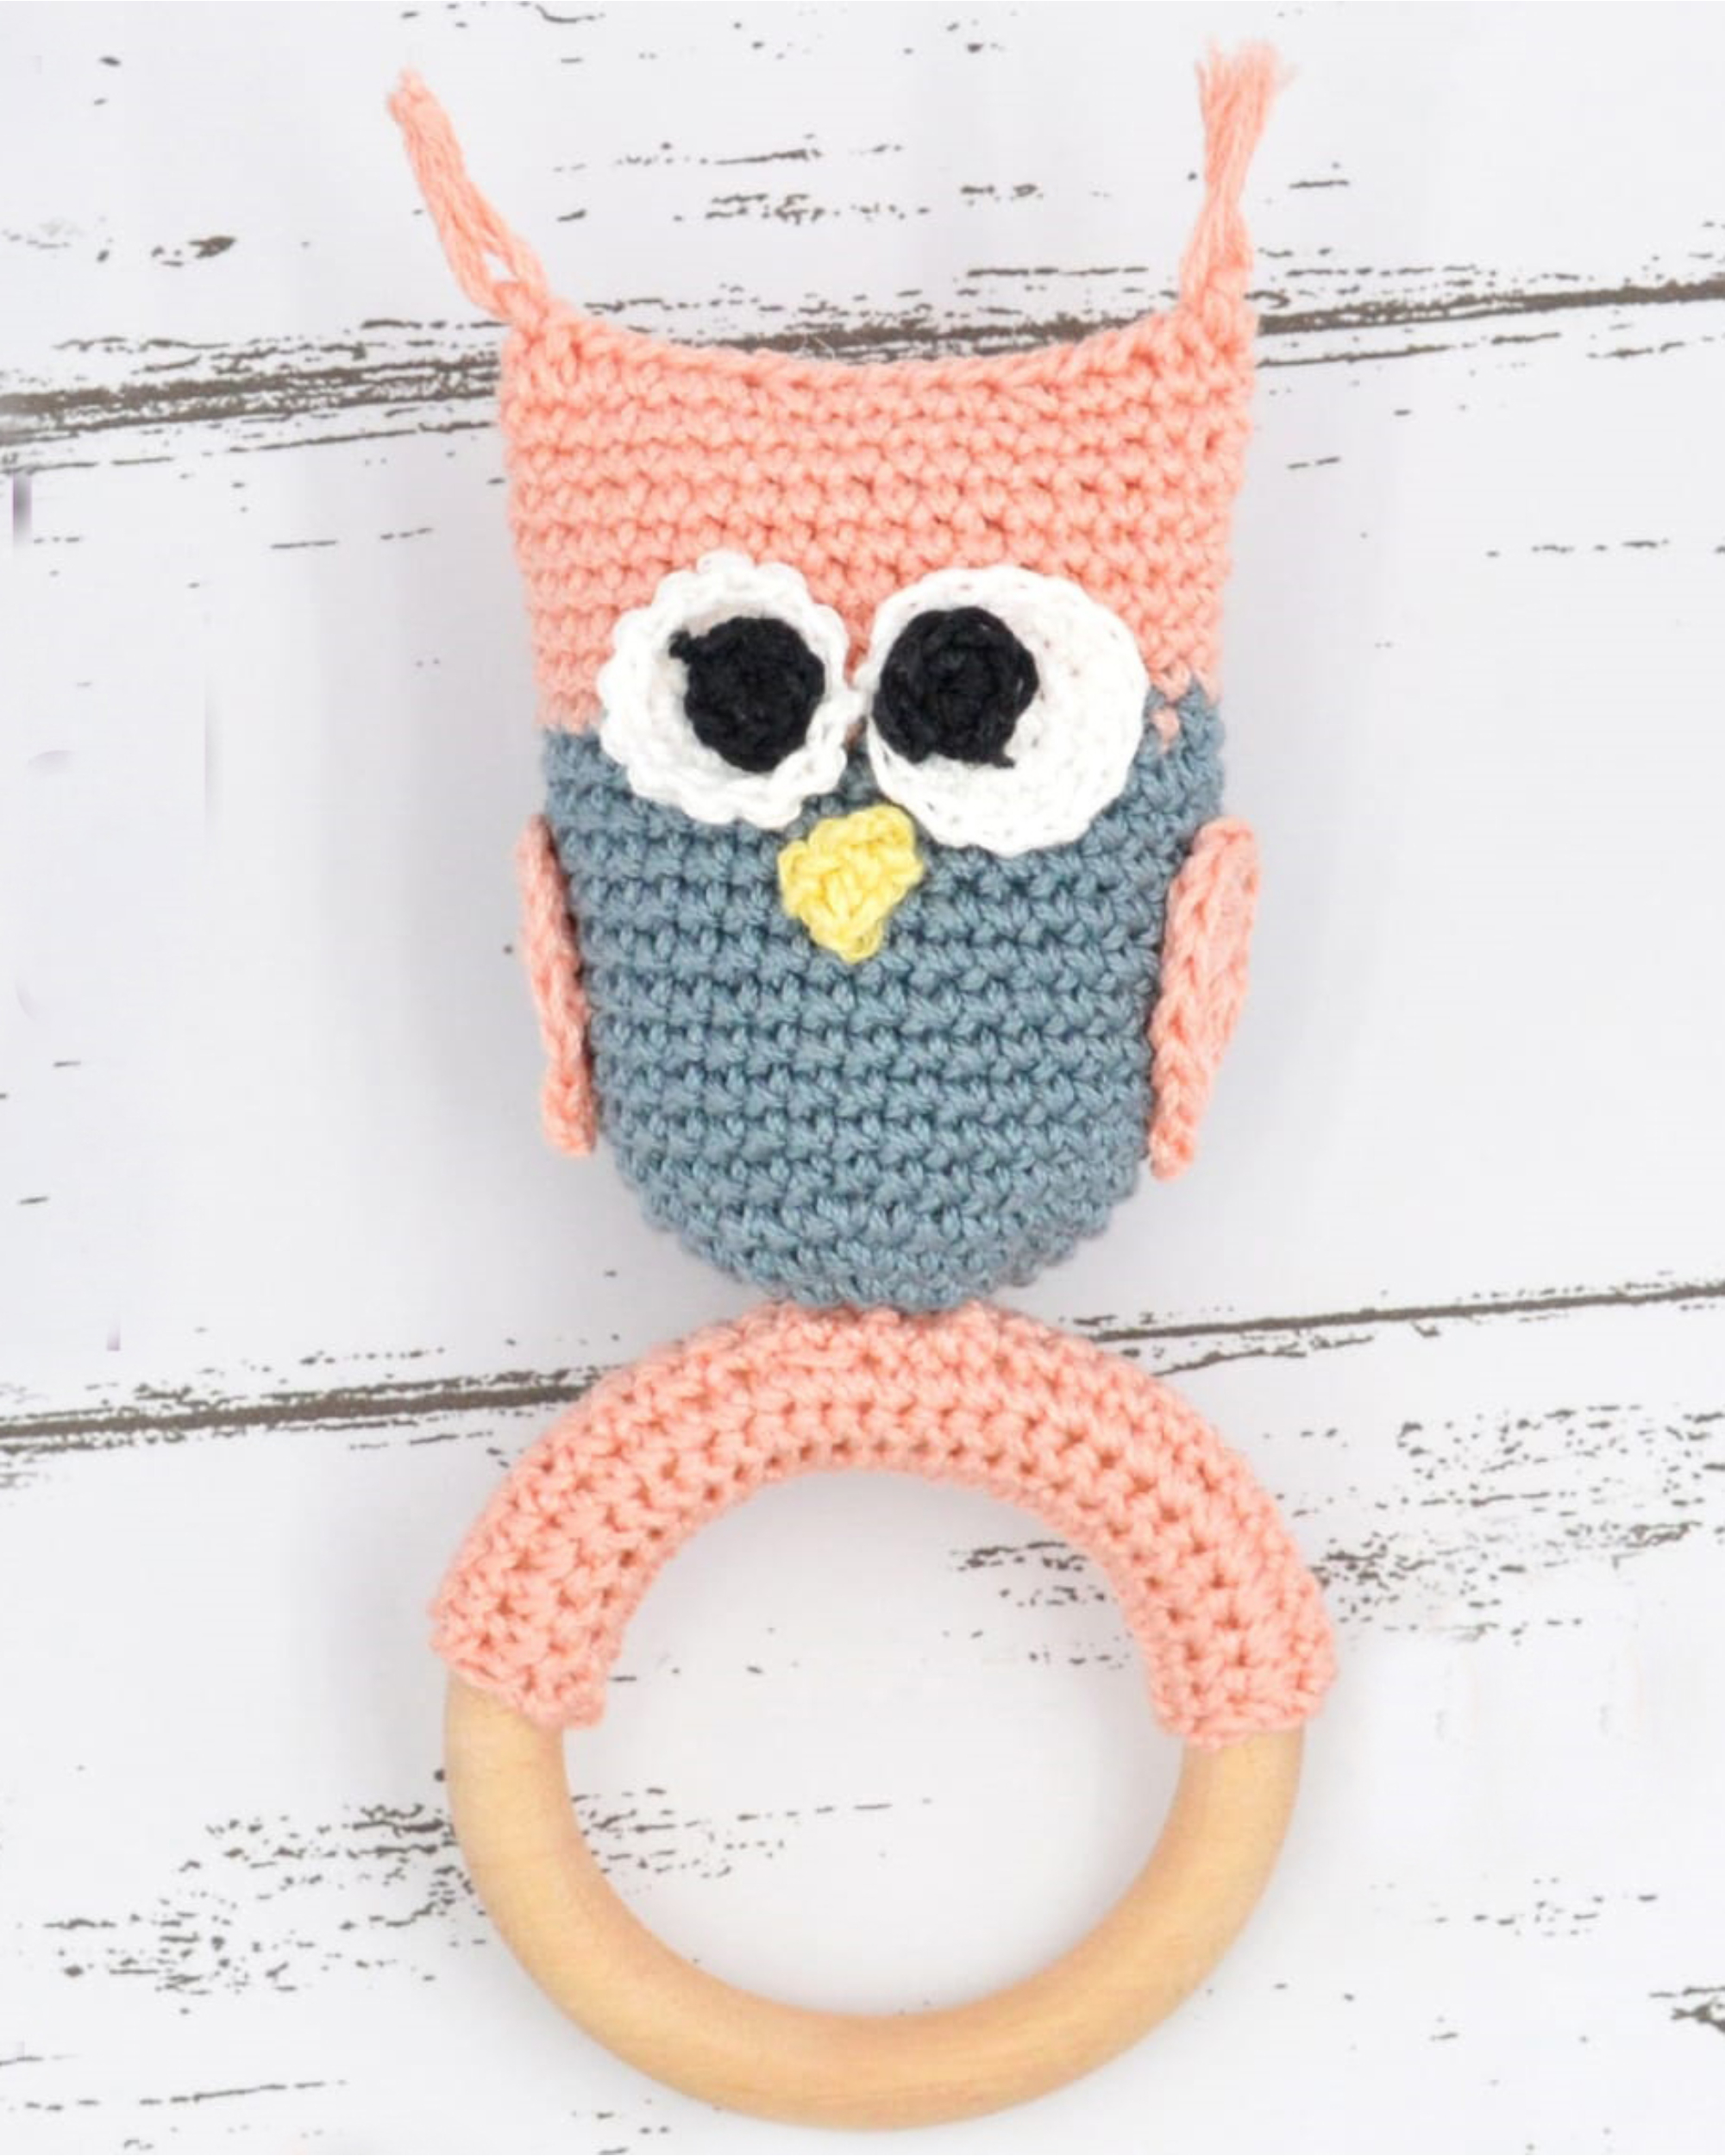 Peach hand crocheted baby sound rattle - owl